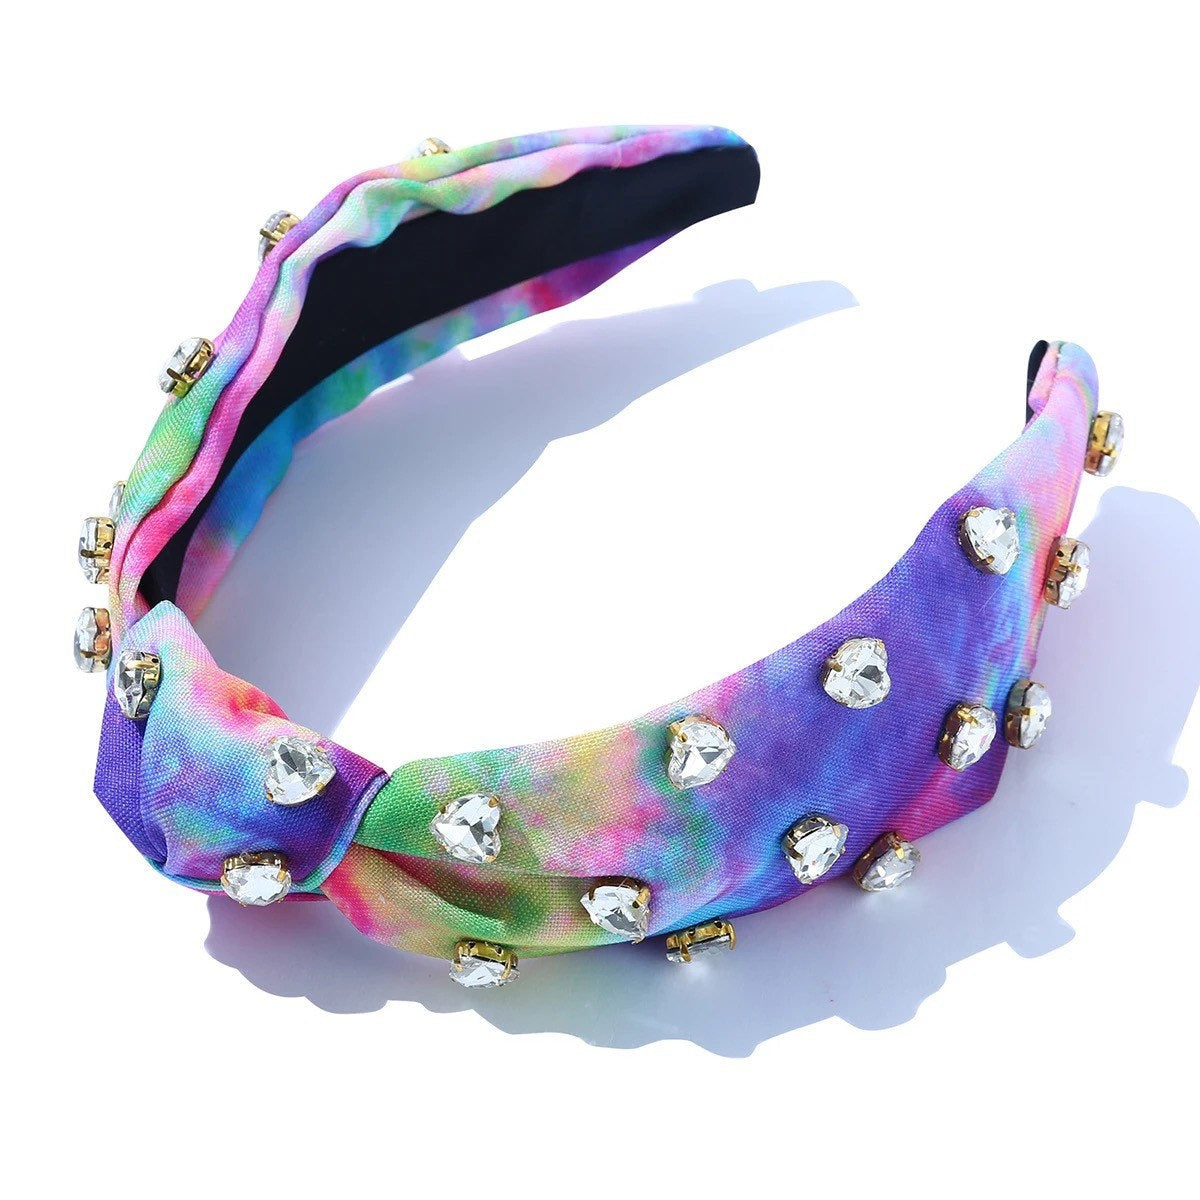 NEW Knotted Headbands- Crystal Bling Headbands with jewels- Tie Dye Headband- Easter Headband- Designer Headband- Heart Headband